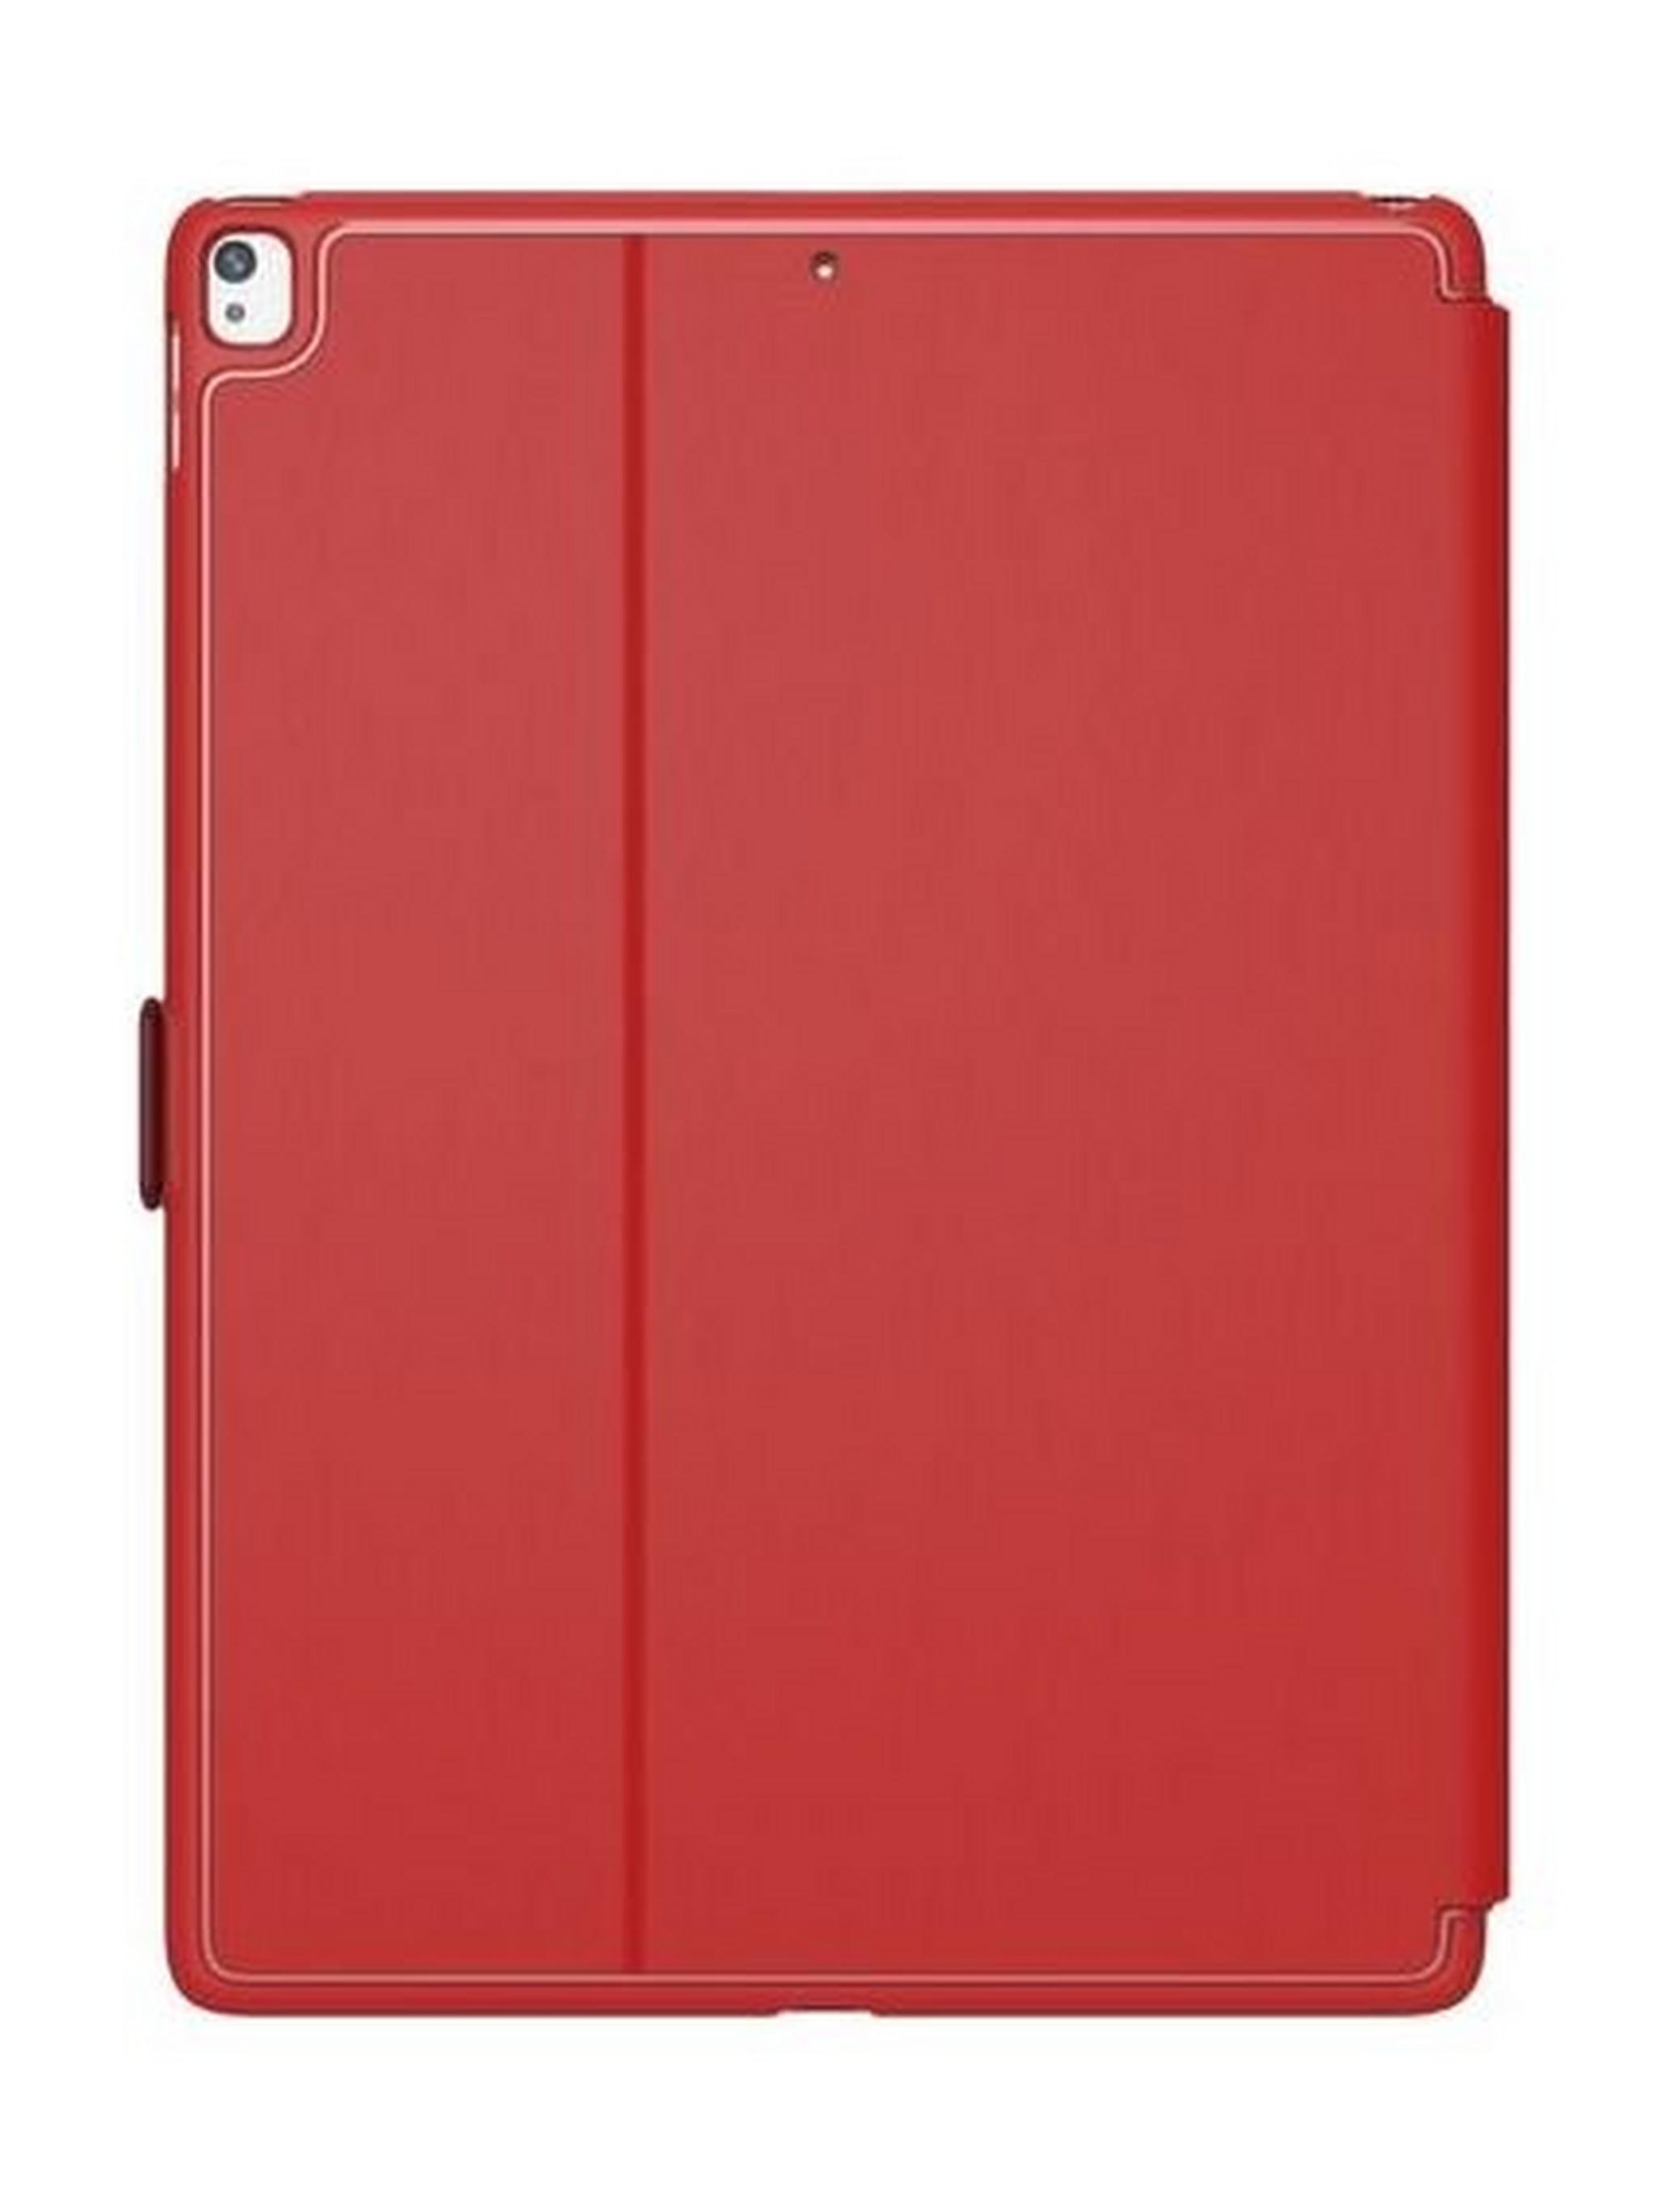 Speck Balance Folio Case for iPad Pro 10.5-Inch (91905-6055) - Dark Poppy Red